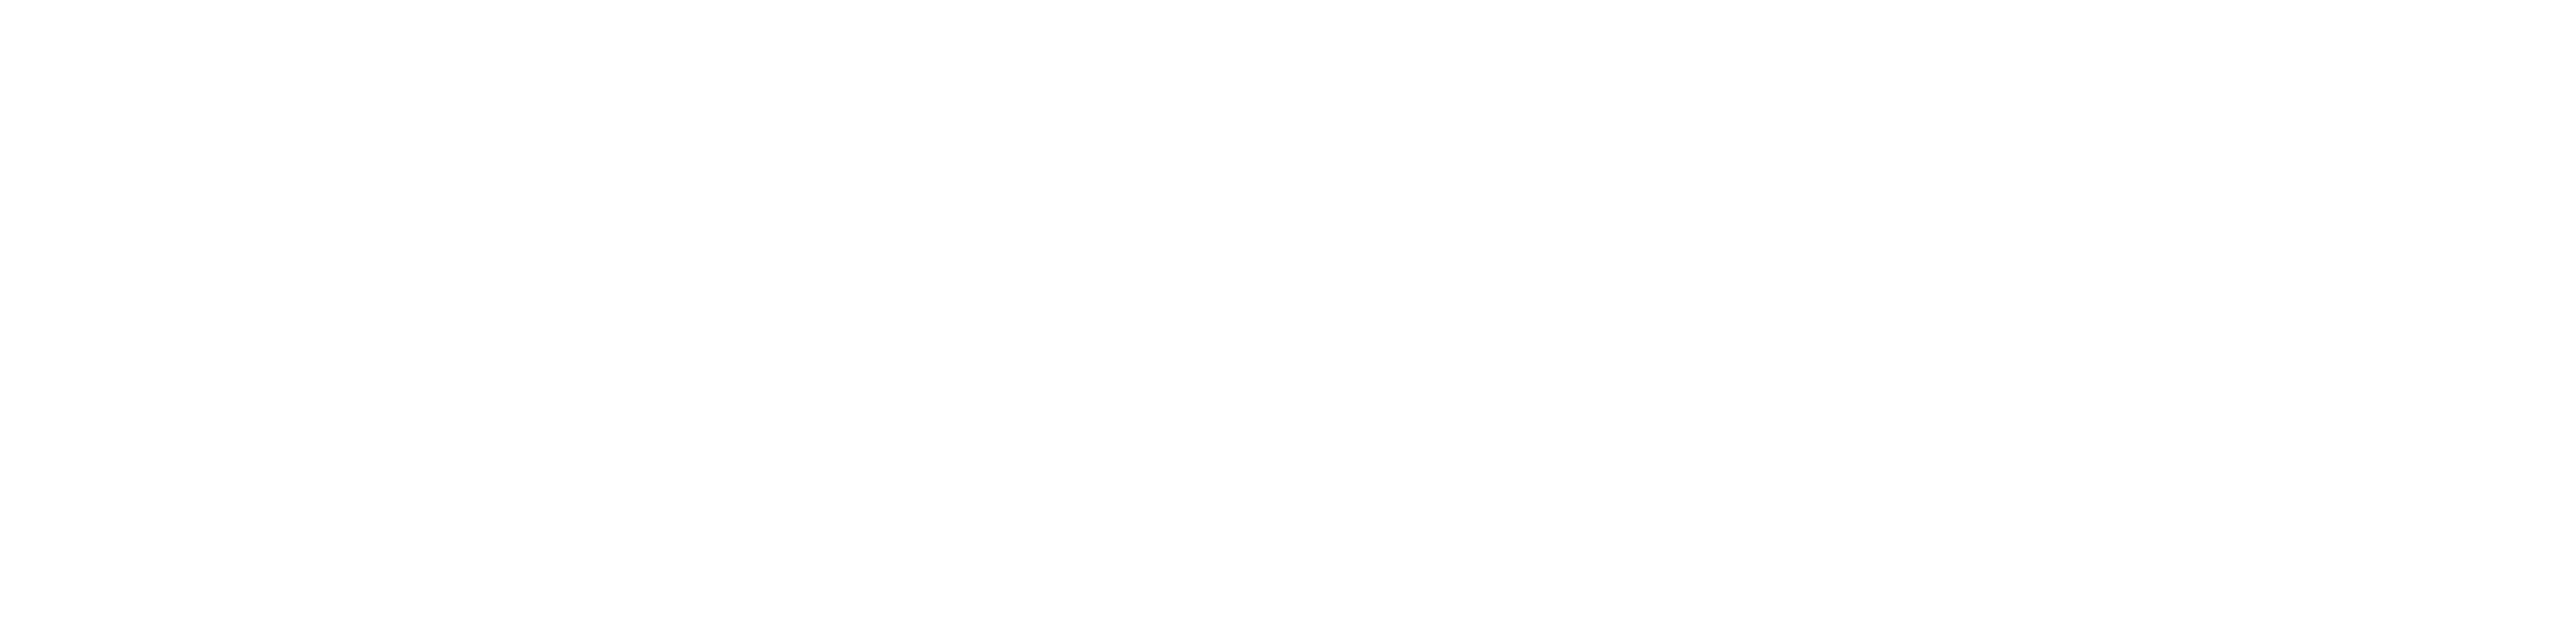 bancstreet Logo in white